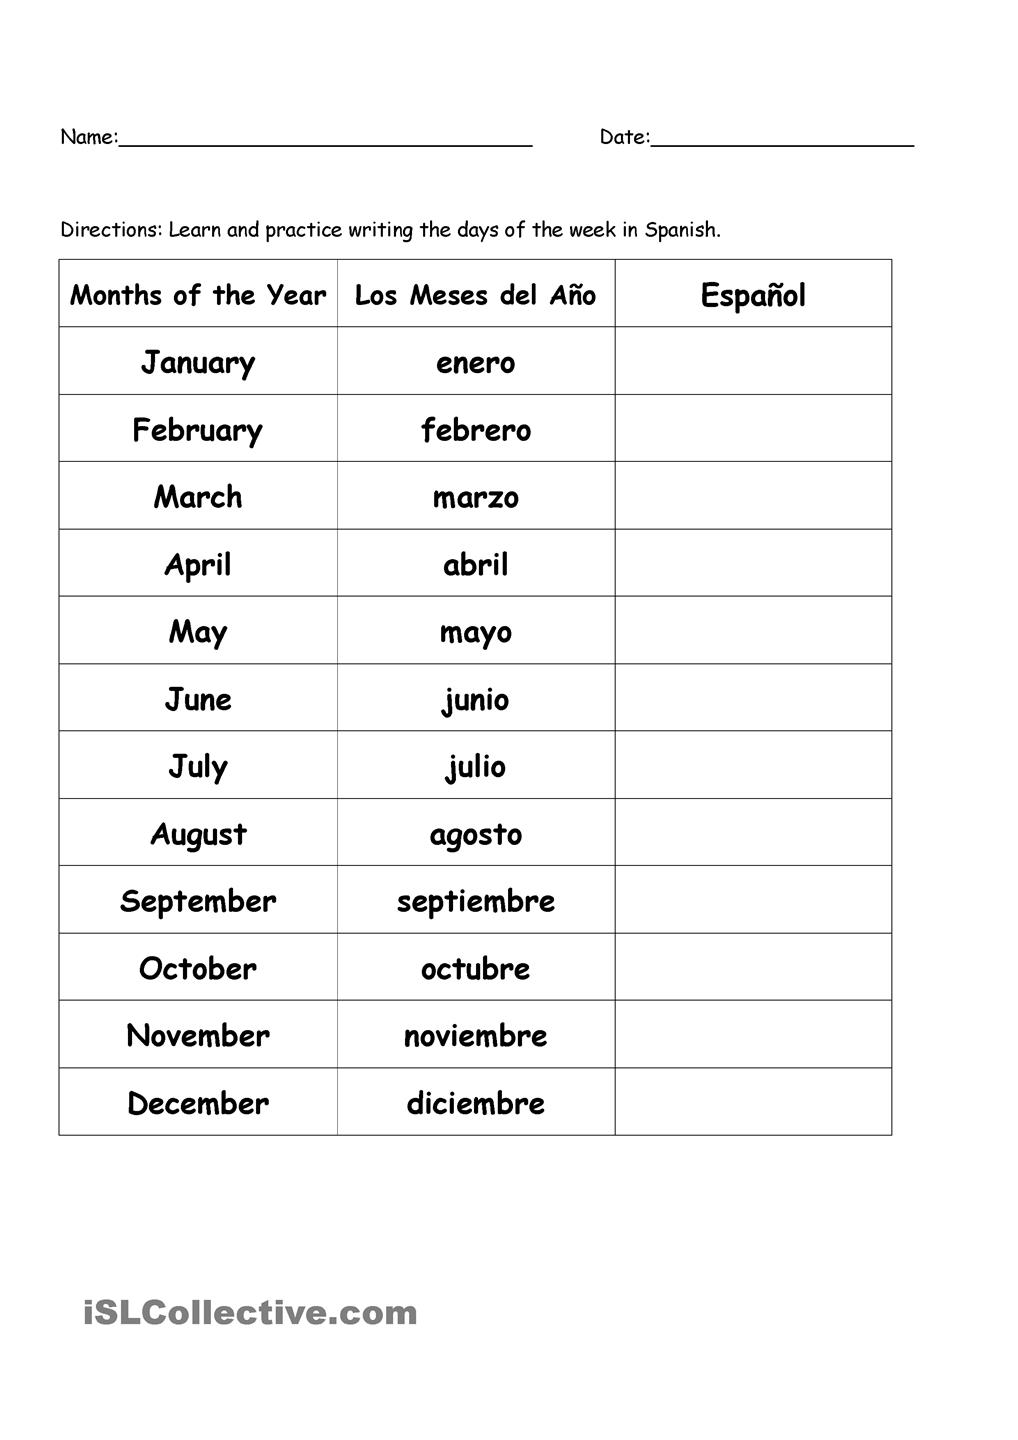 13-best-images-of-spanish-months-worksheet-spanish-months-of-year-worksheet-learning-spanish